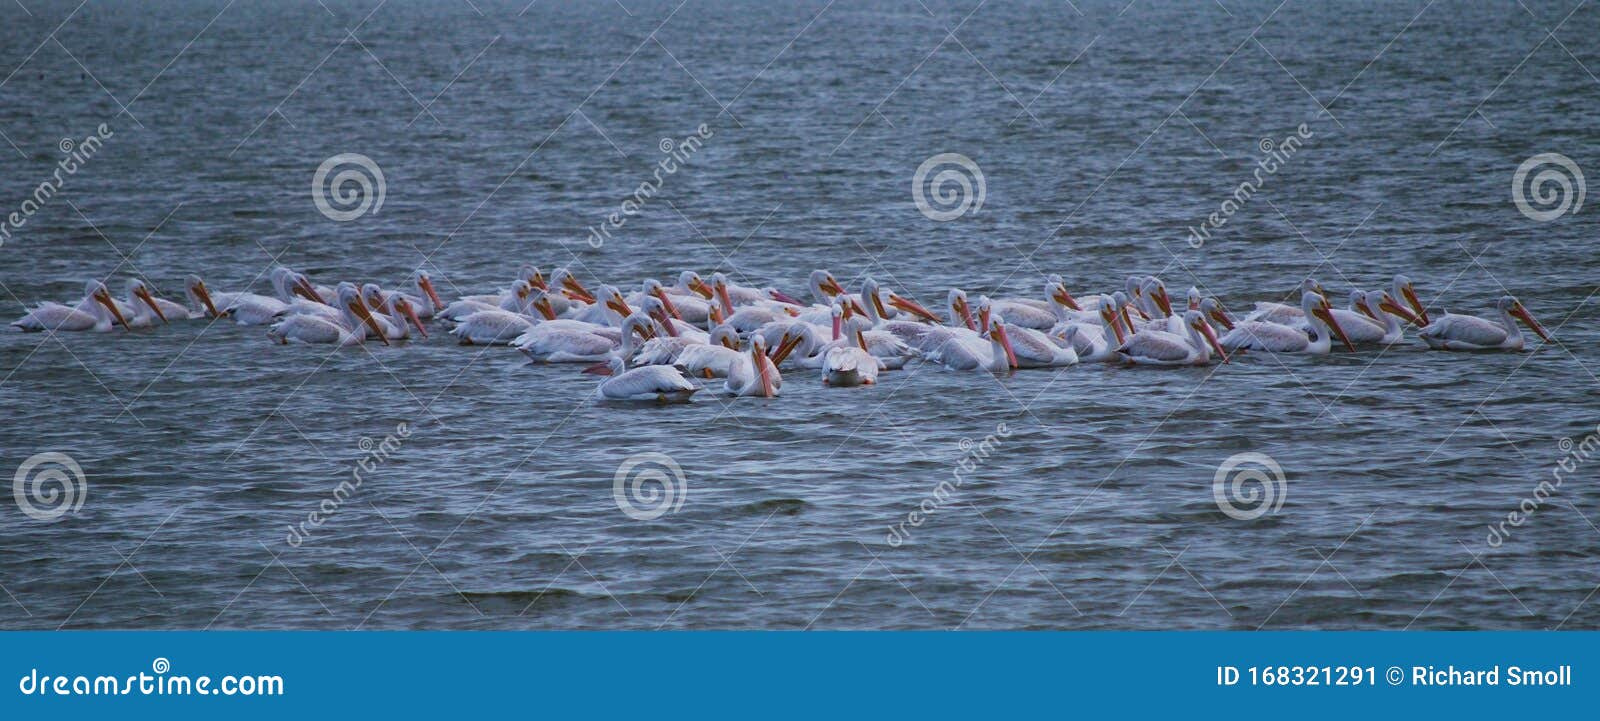 oso bay white pelicans 2